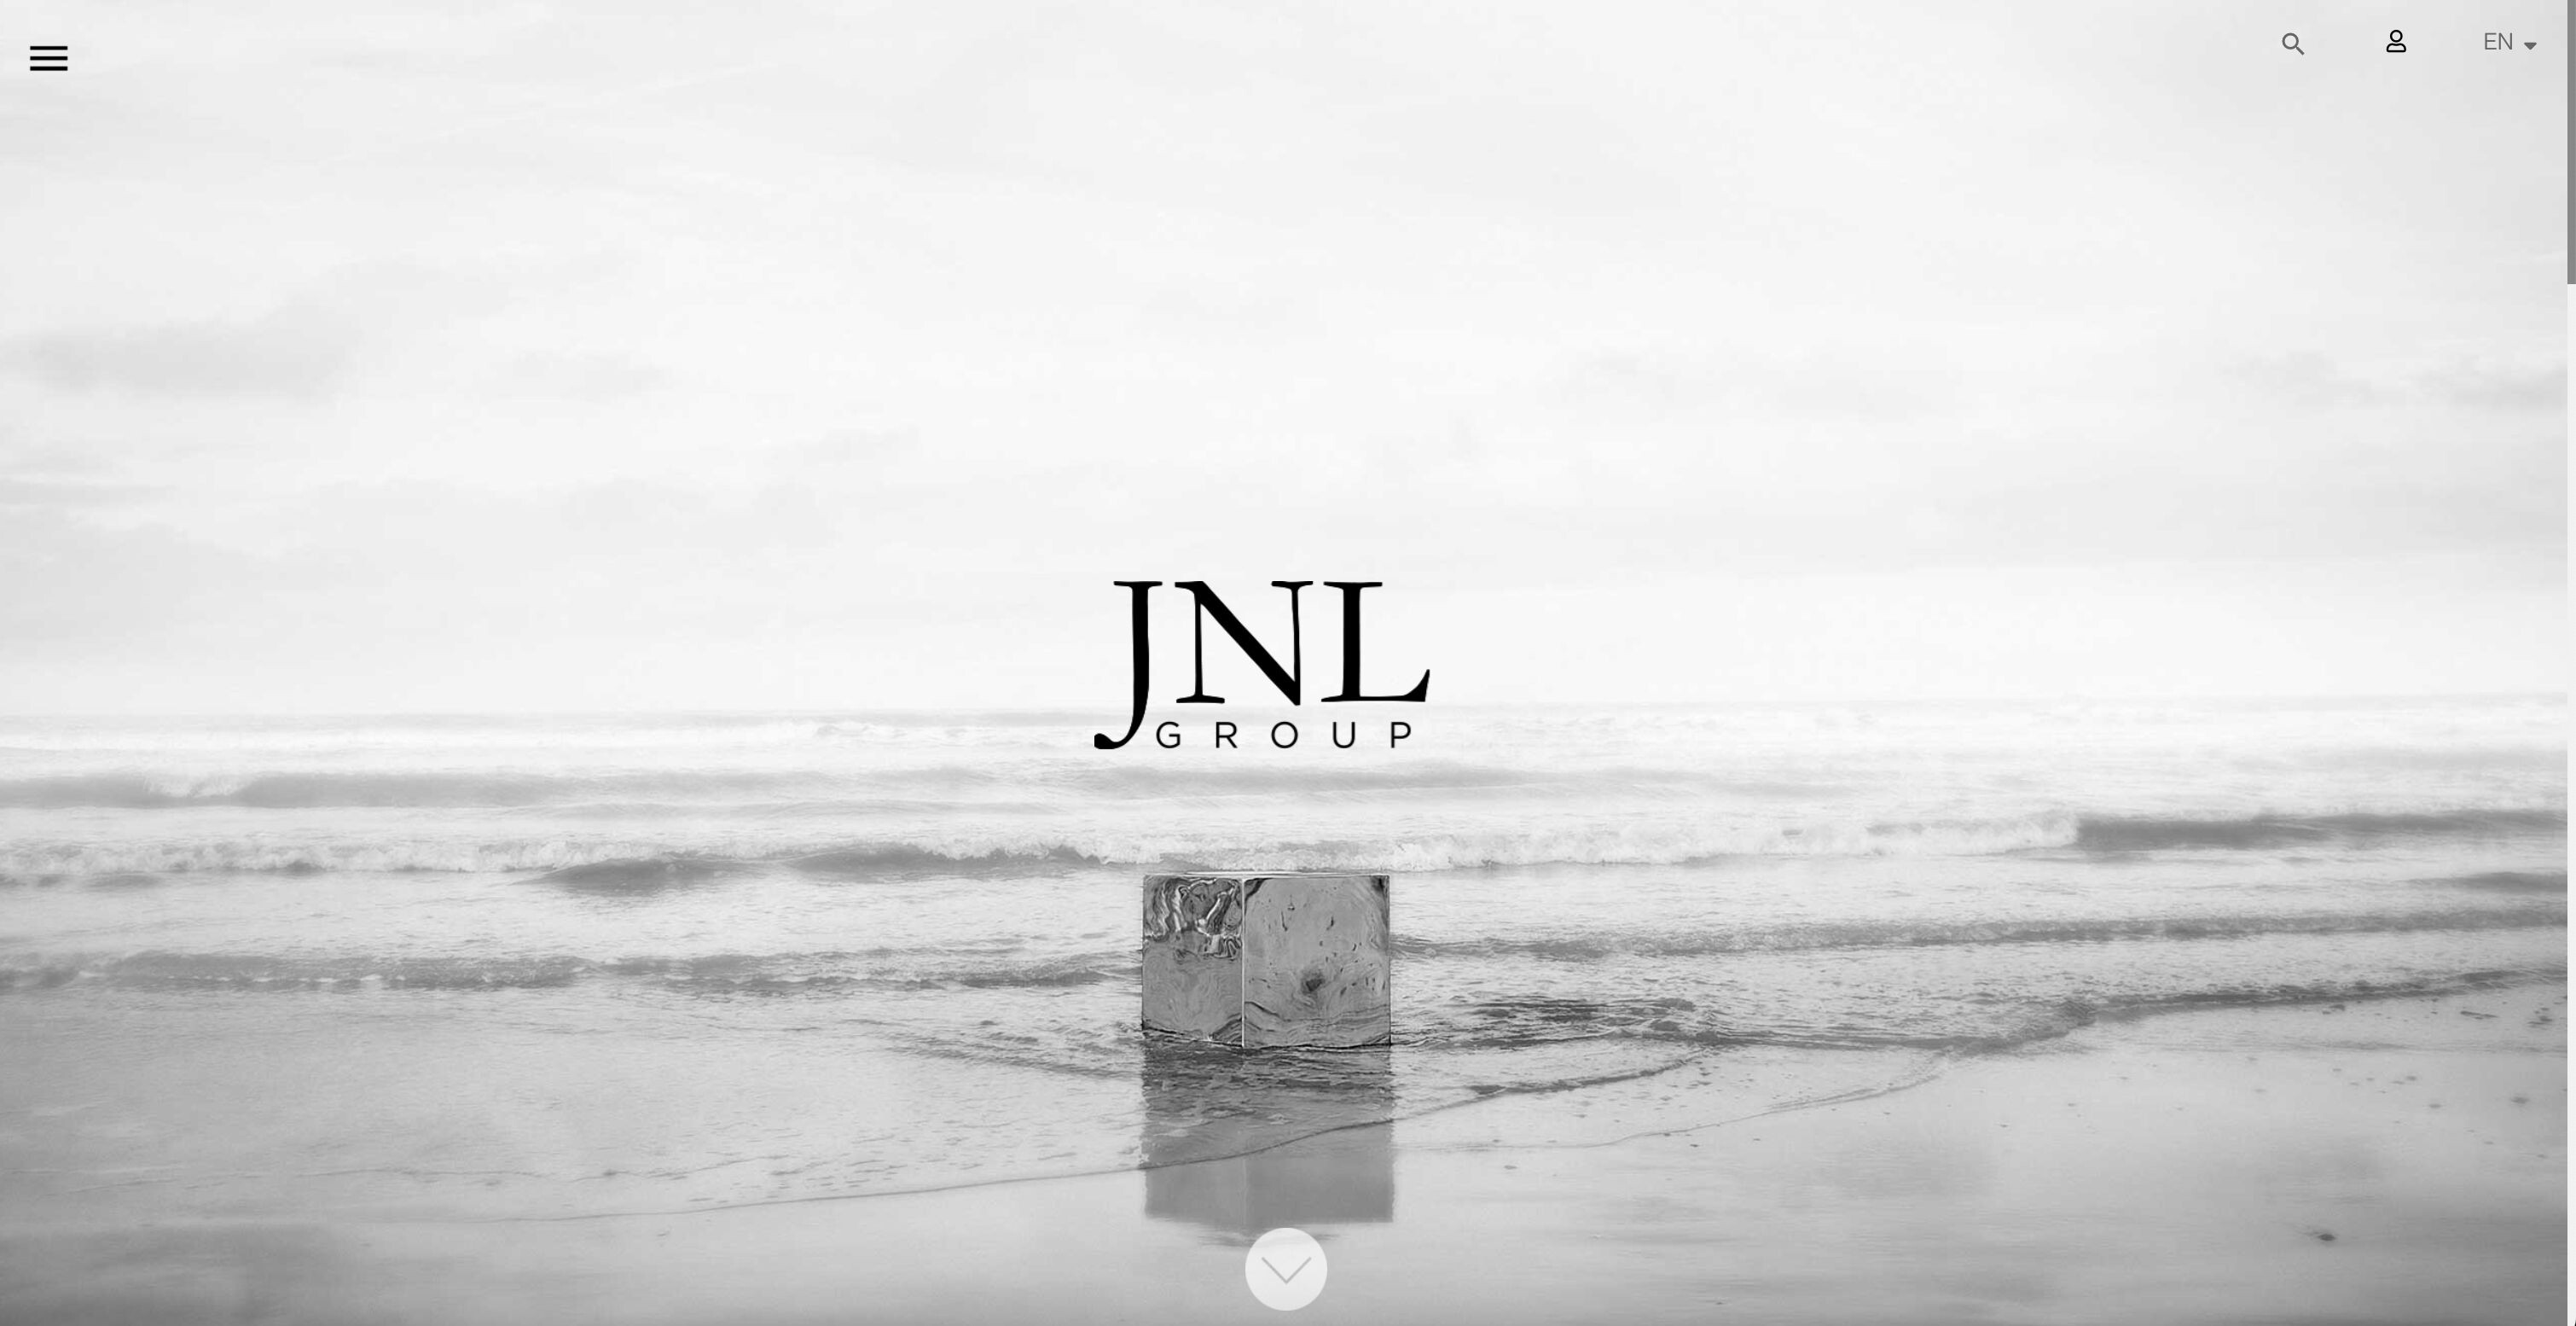 JNL